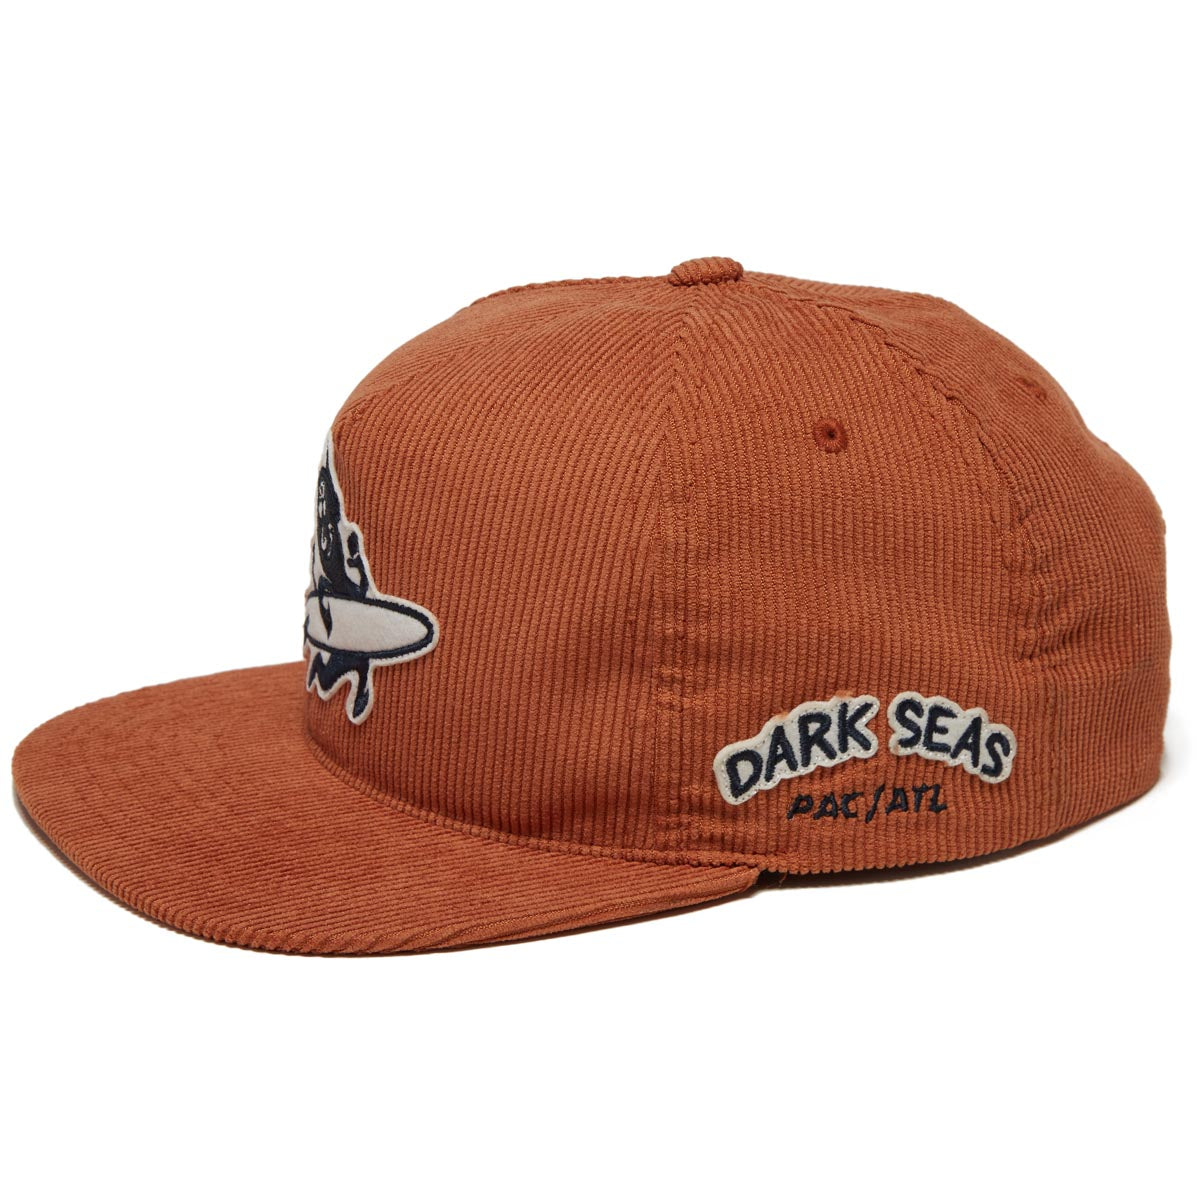 Dark Seas Booster Hat - Rust image 3